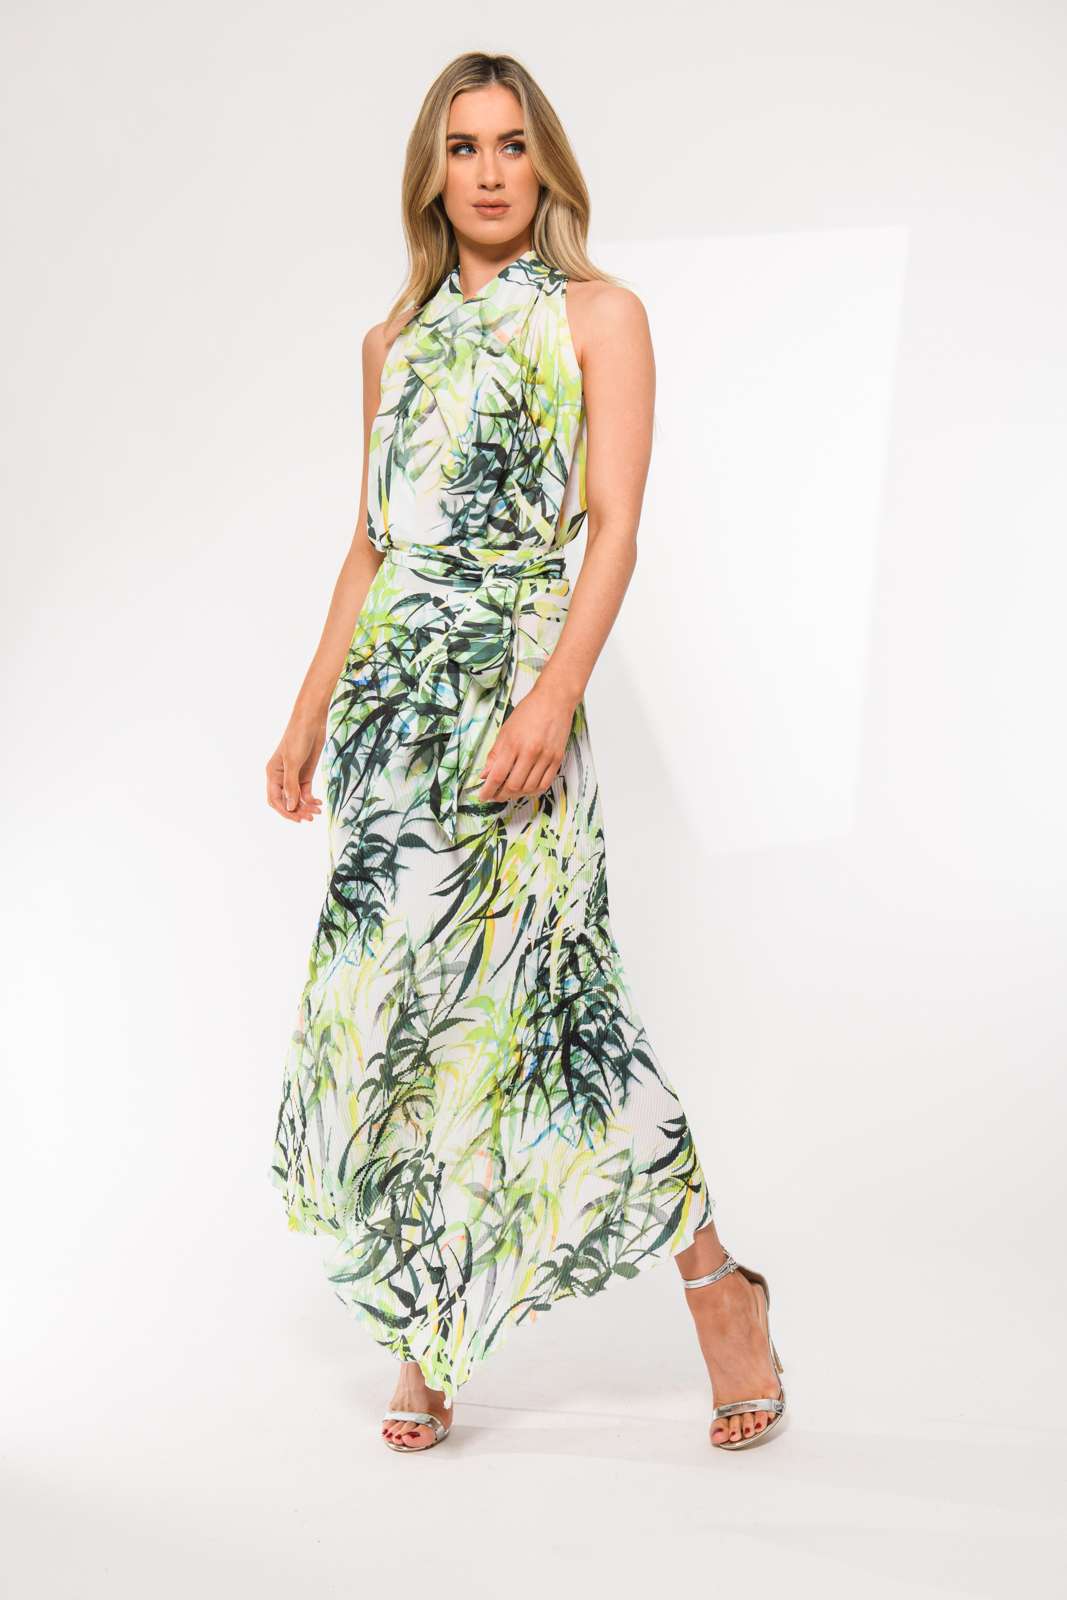 Kevan Jon tropical print dress - Maya Maya Ltd